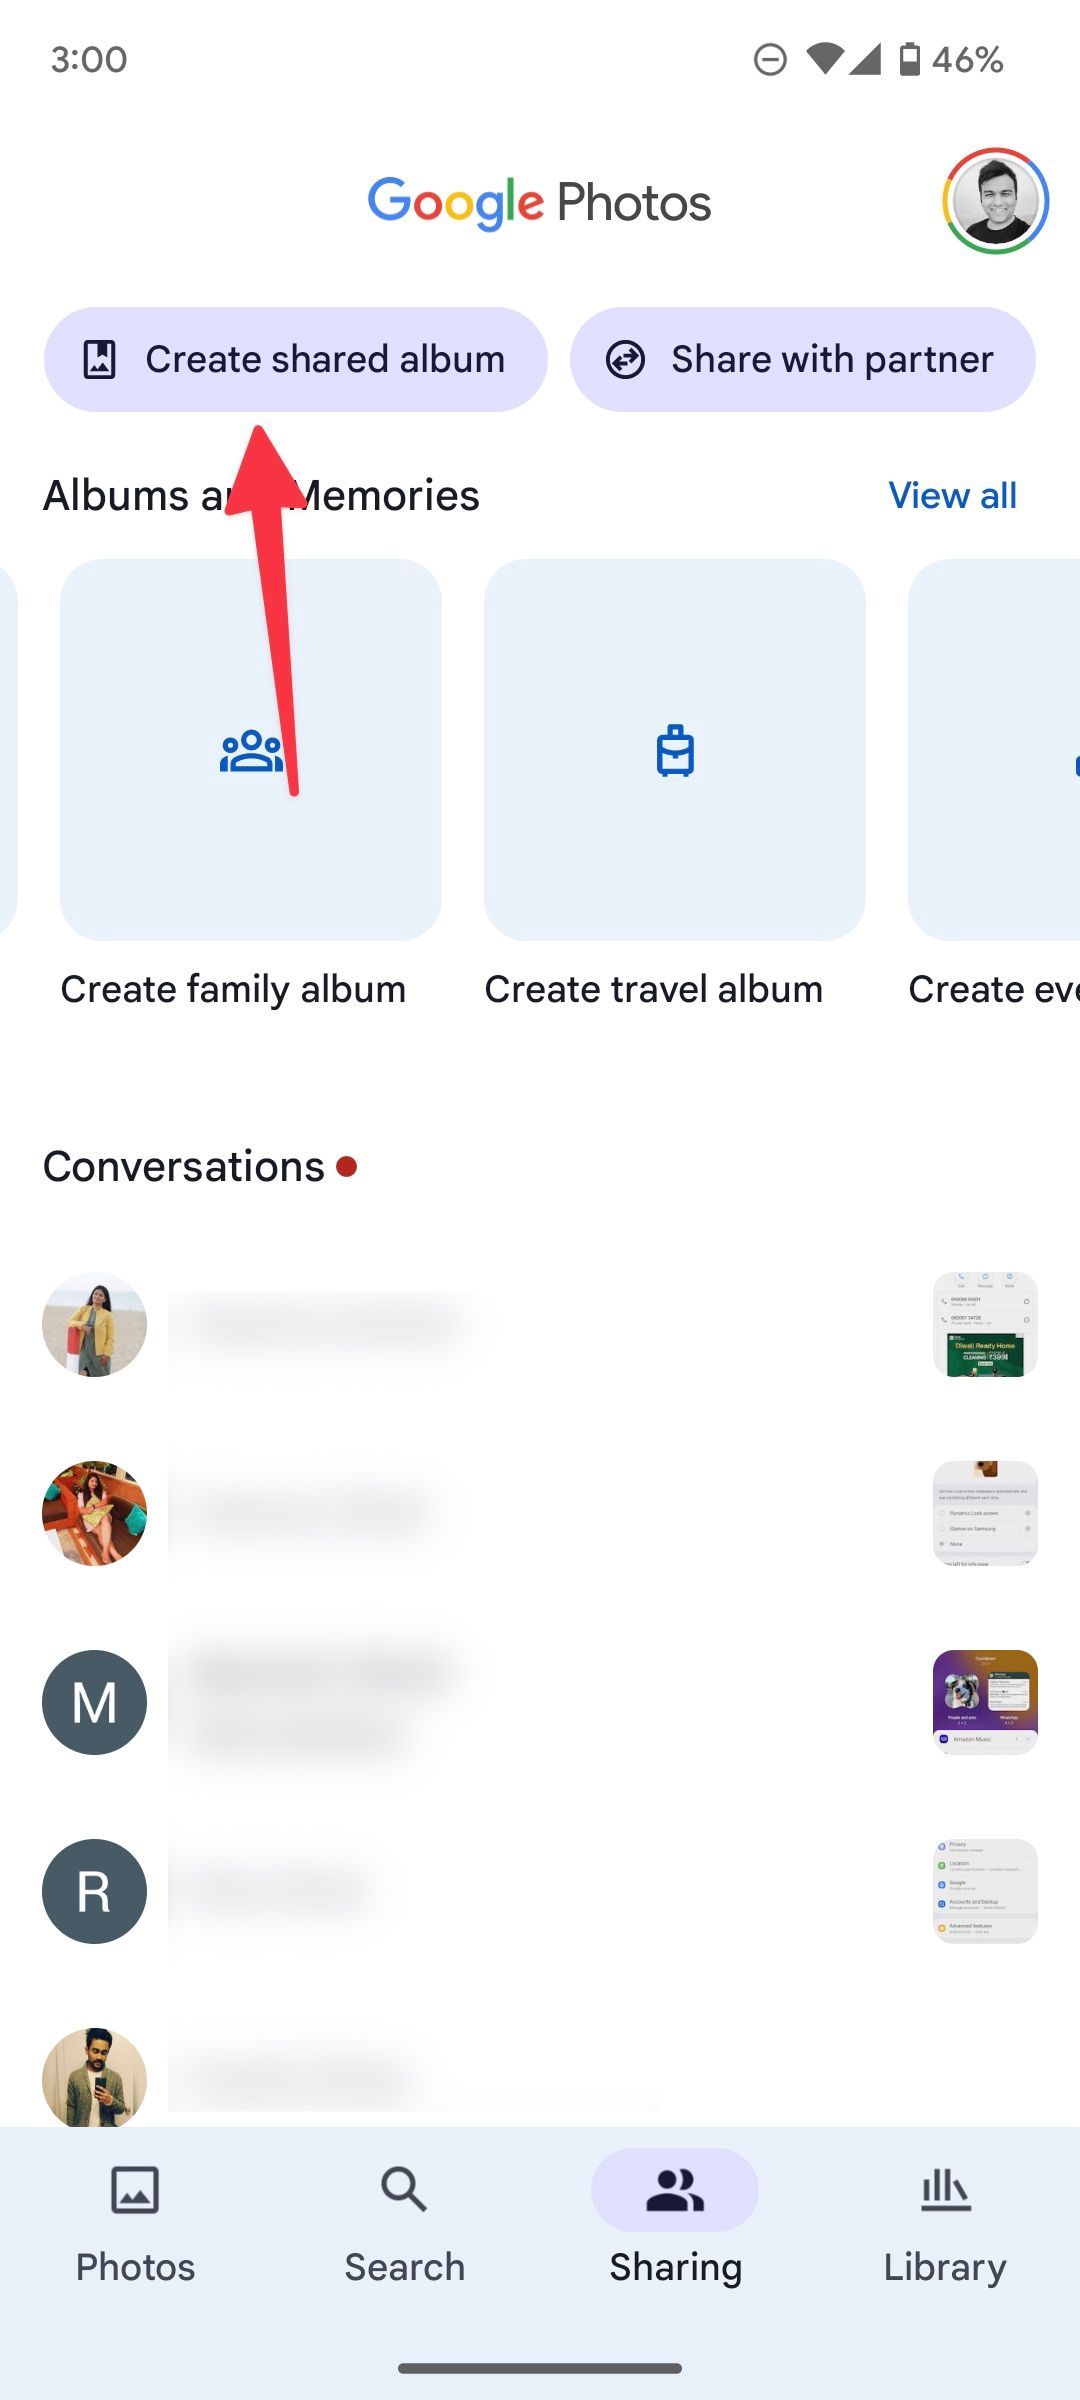 Create shared album in Google Photos